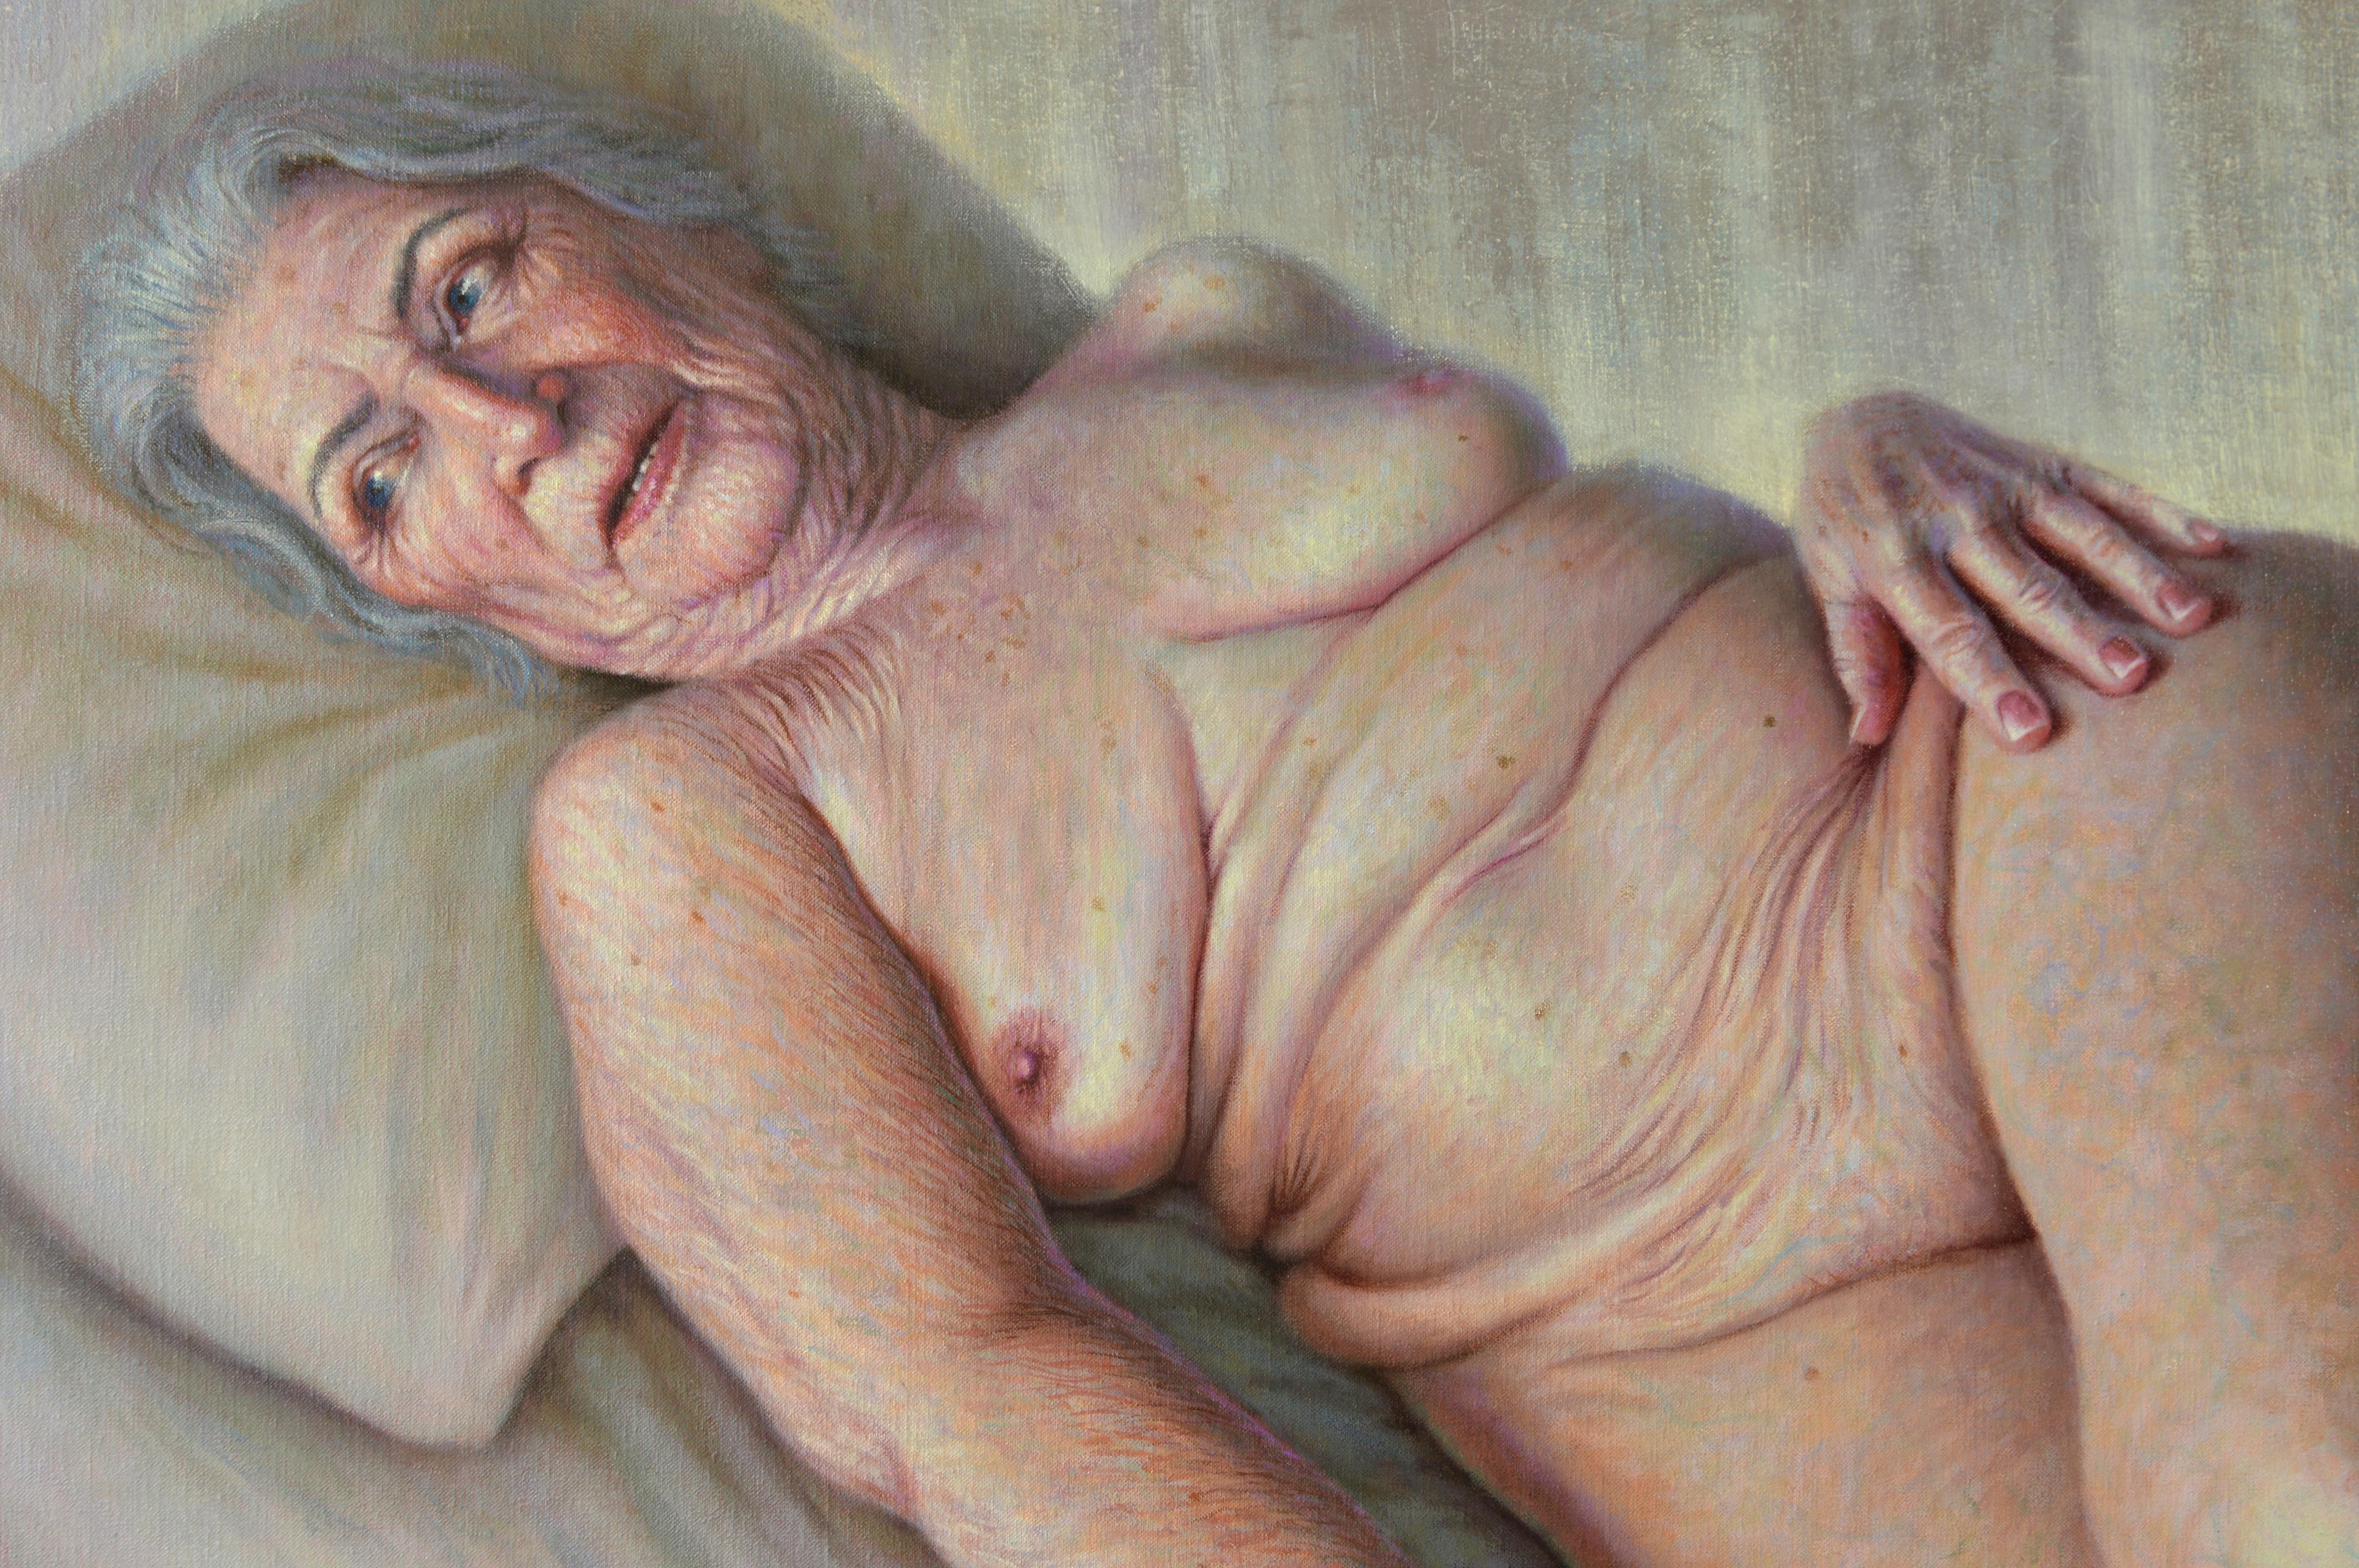 Precious bodies - Painting by Francien Krieg